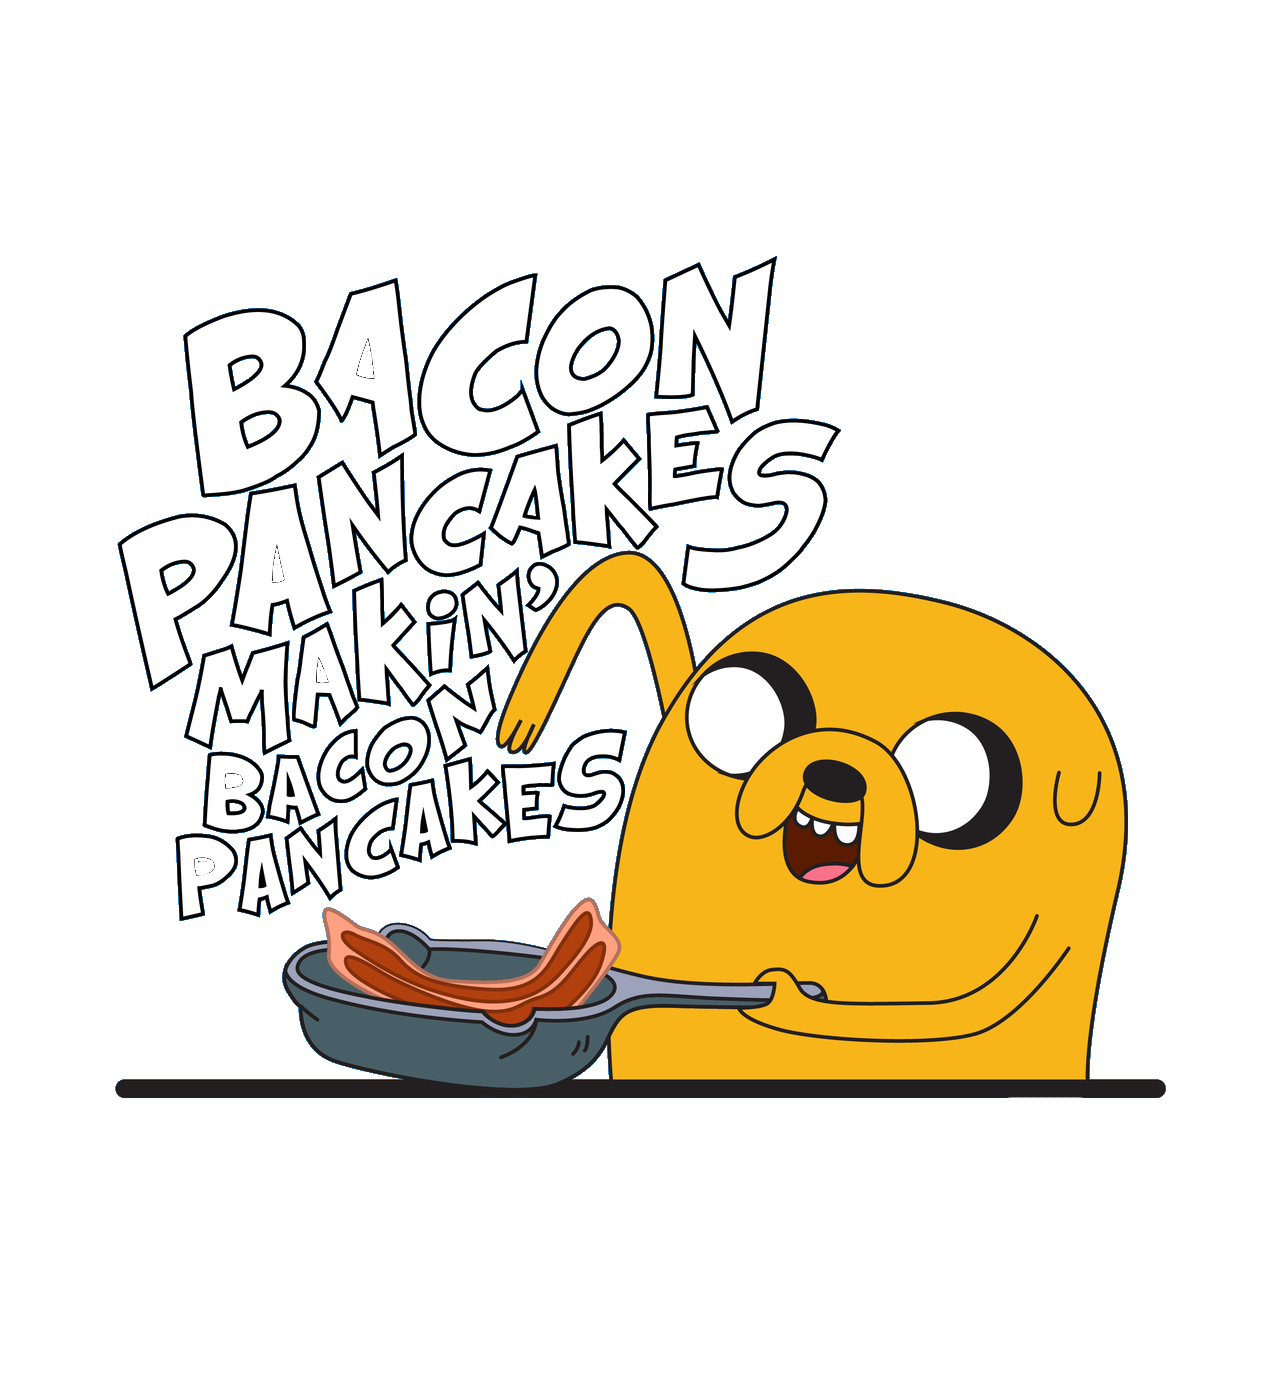 Pancakes clipart pixel art. Image makin bacon edited